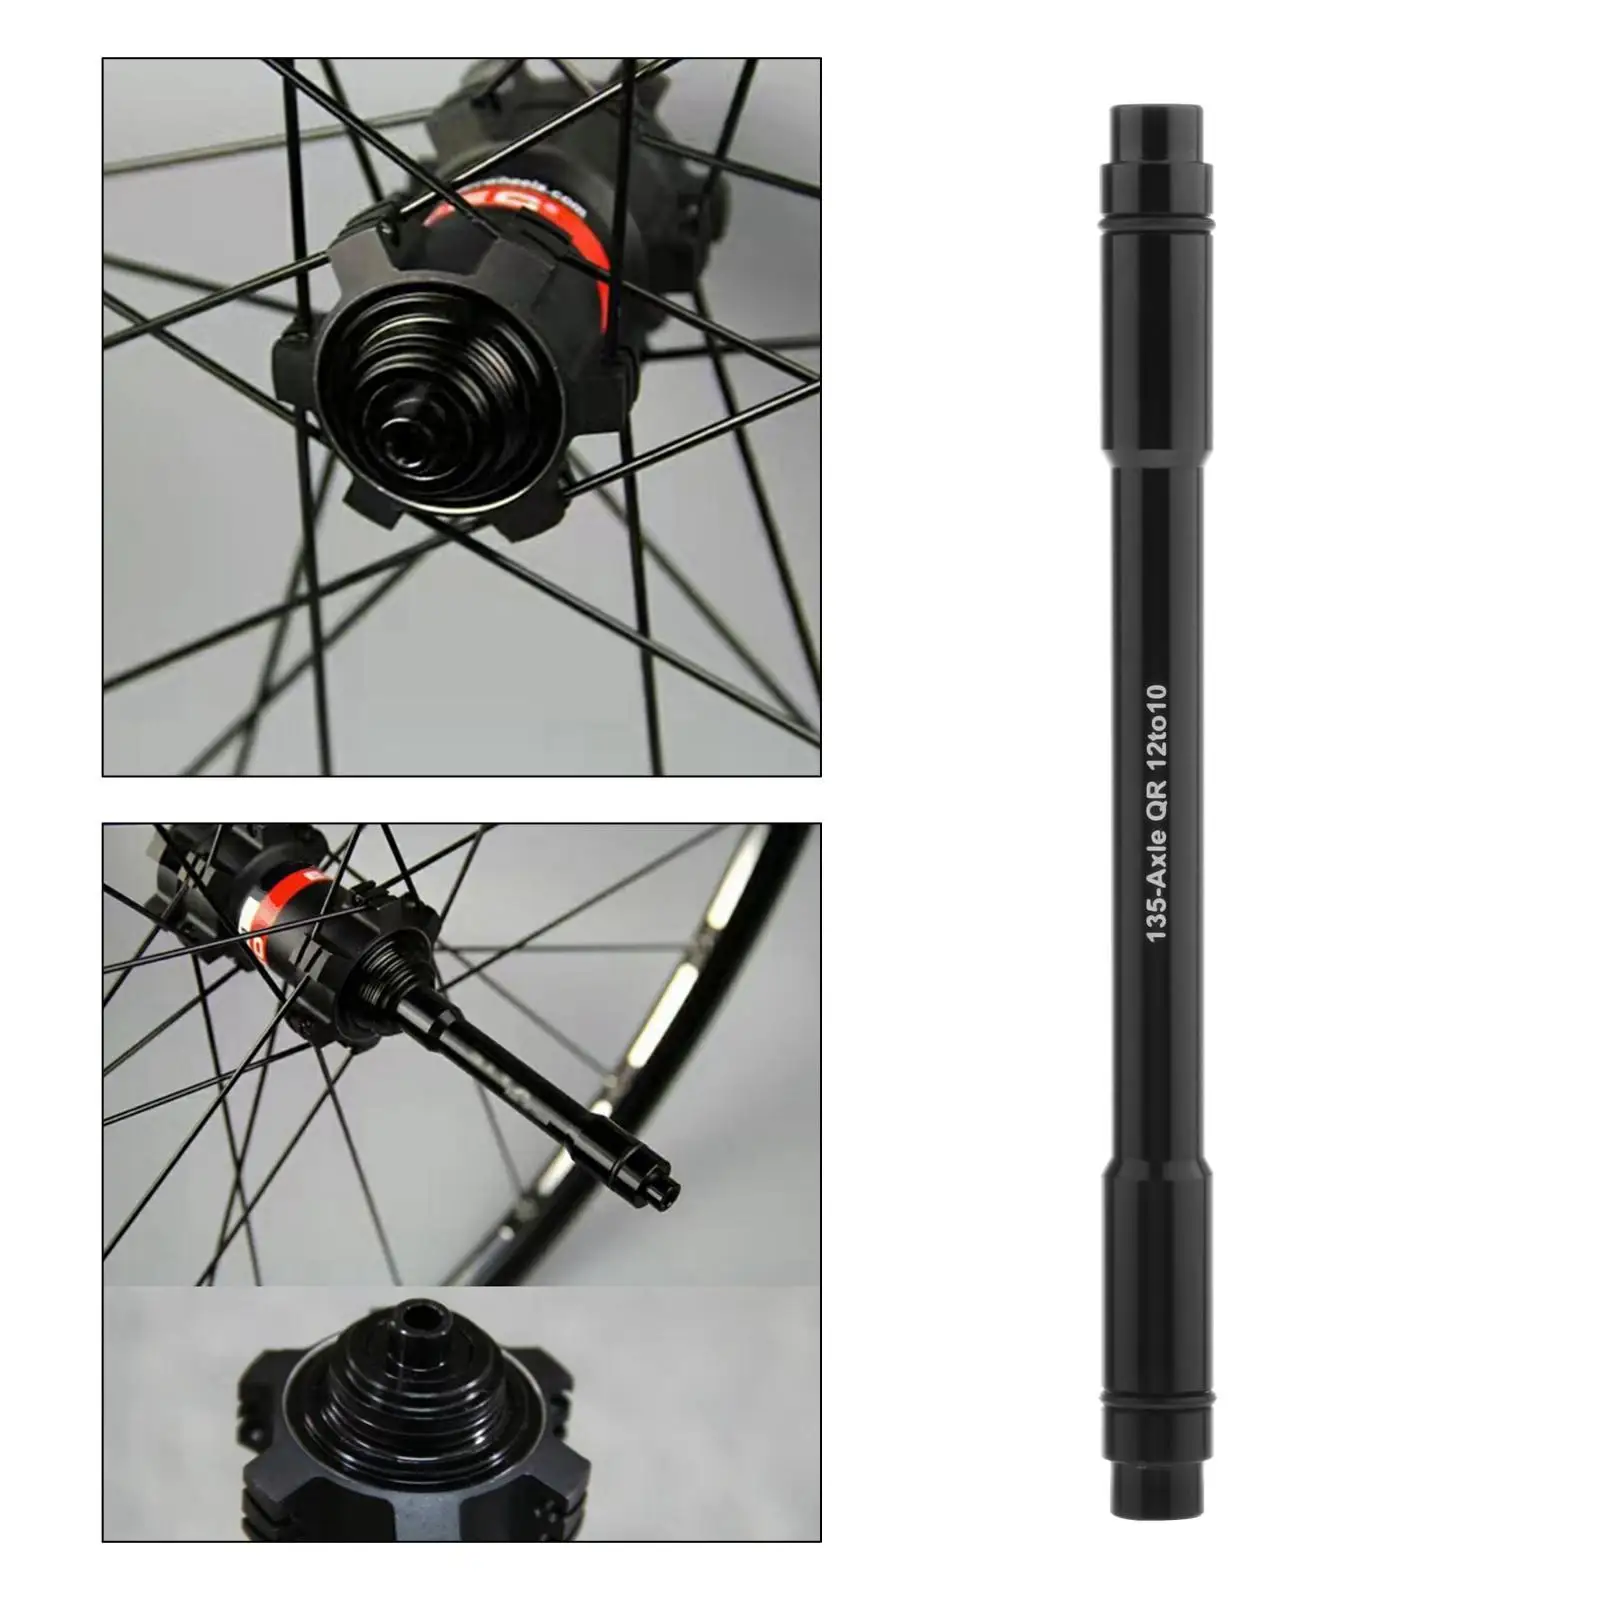 12mm to Standard 10mm Bike Thru Axle Adapter, Quick Release Wheel